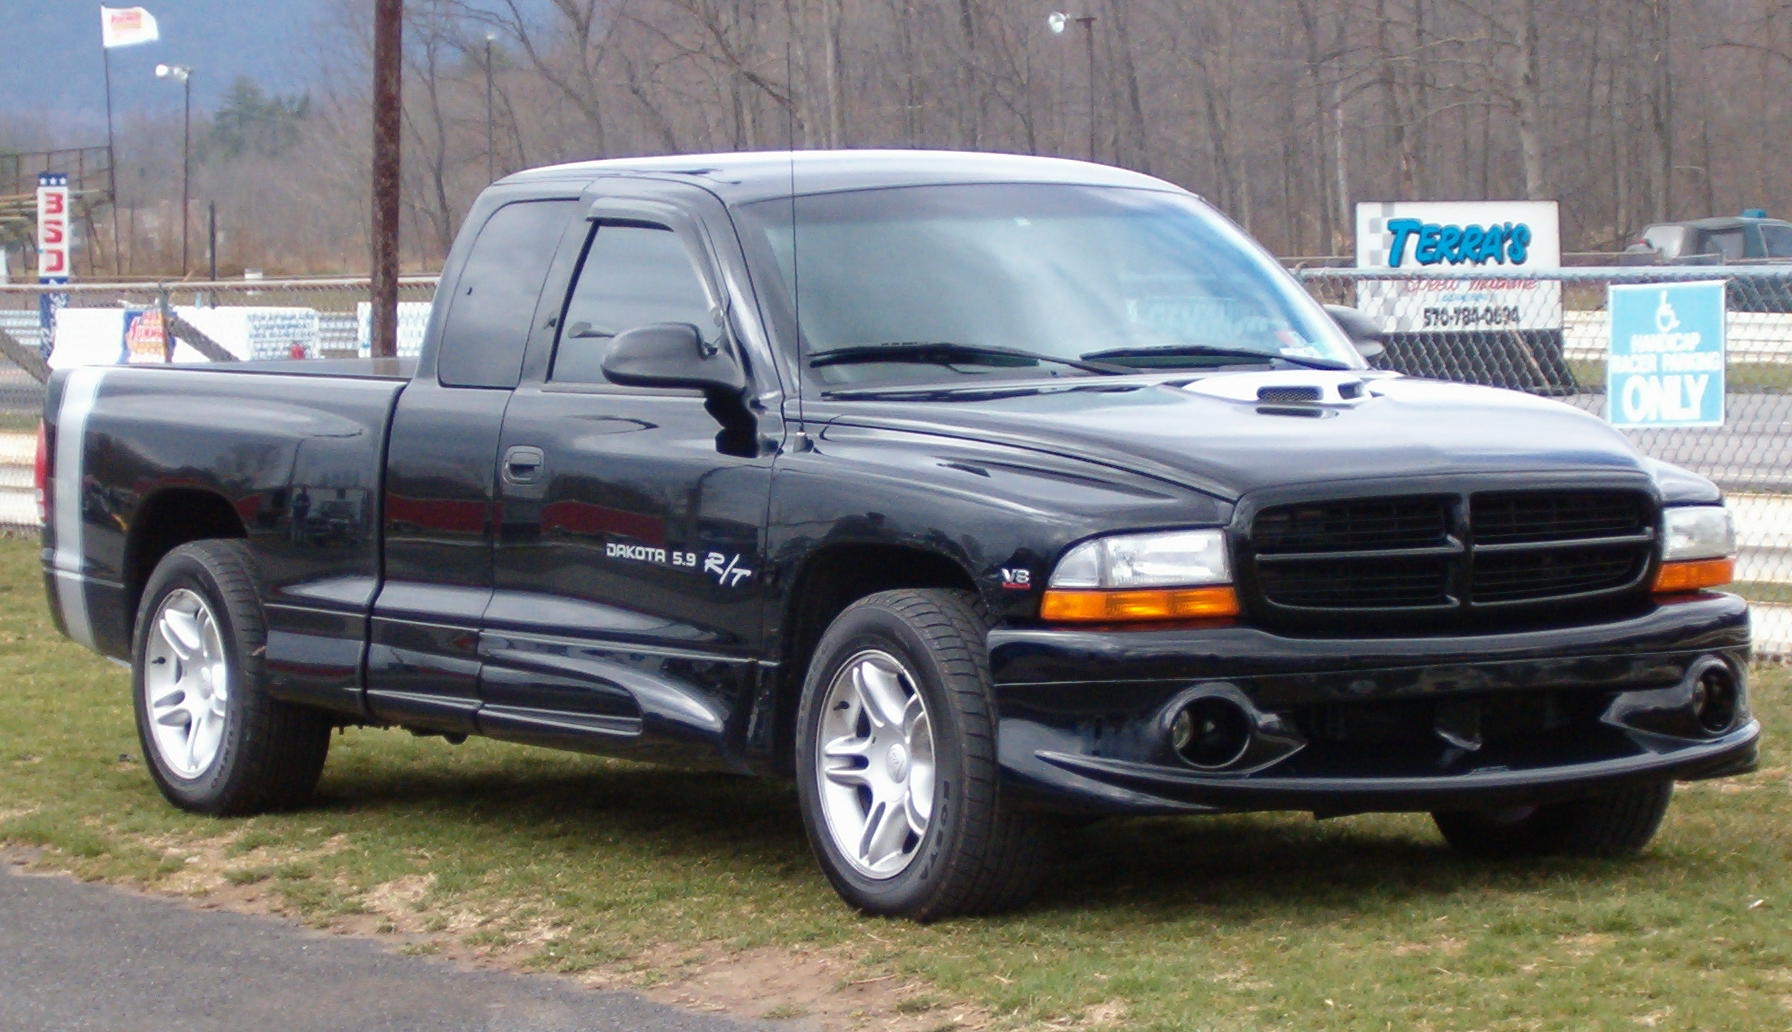 Dodge Series B pickup (09 image) Size: 1792 x 1032 px | 17603 views